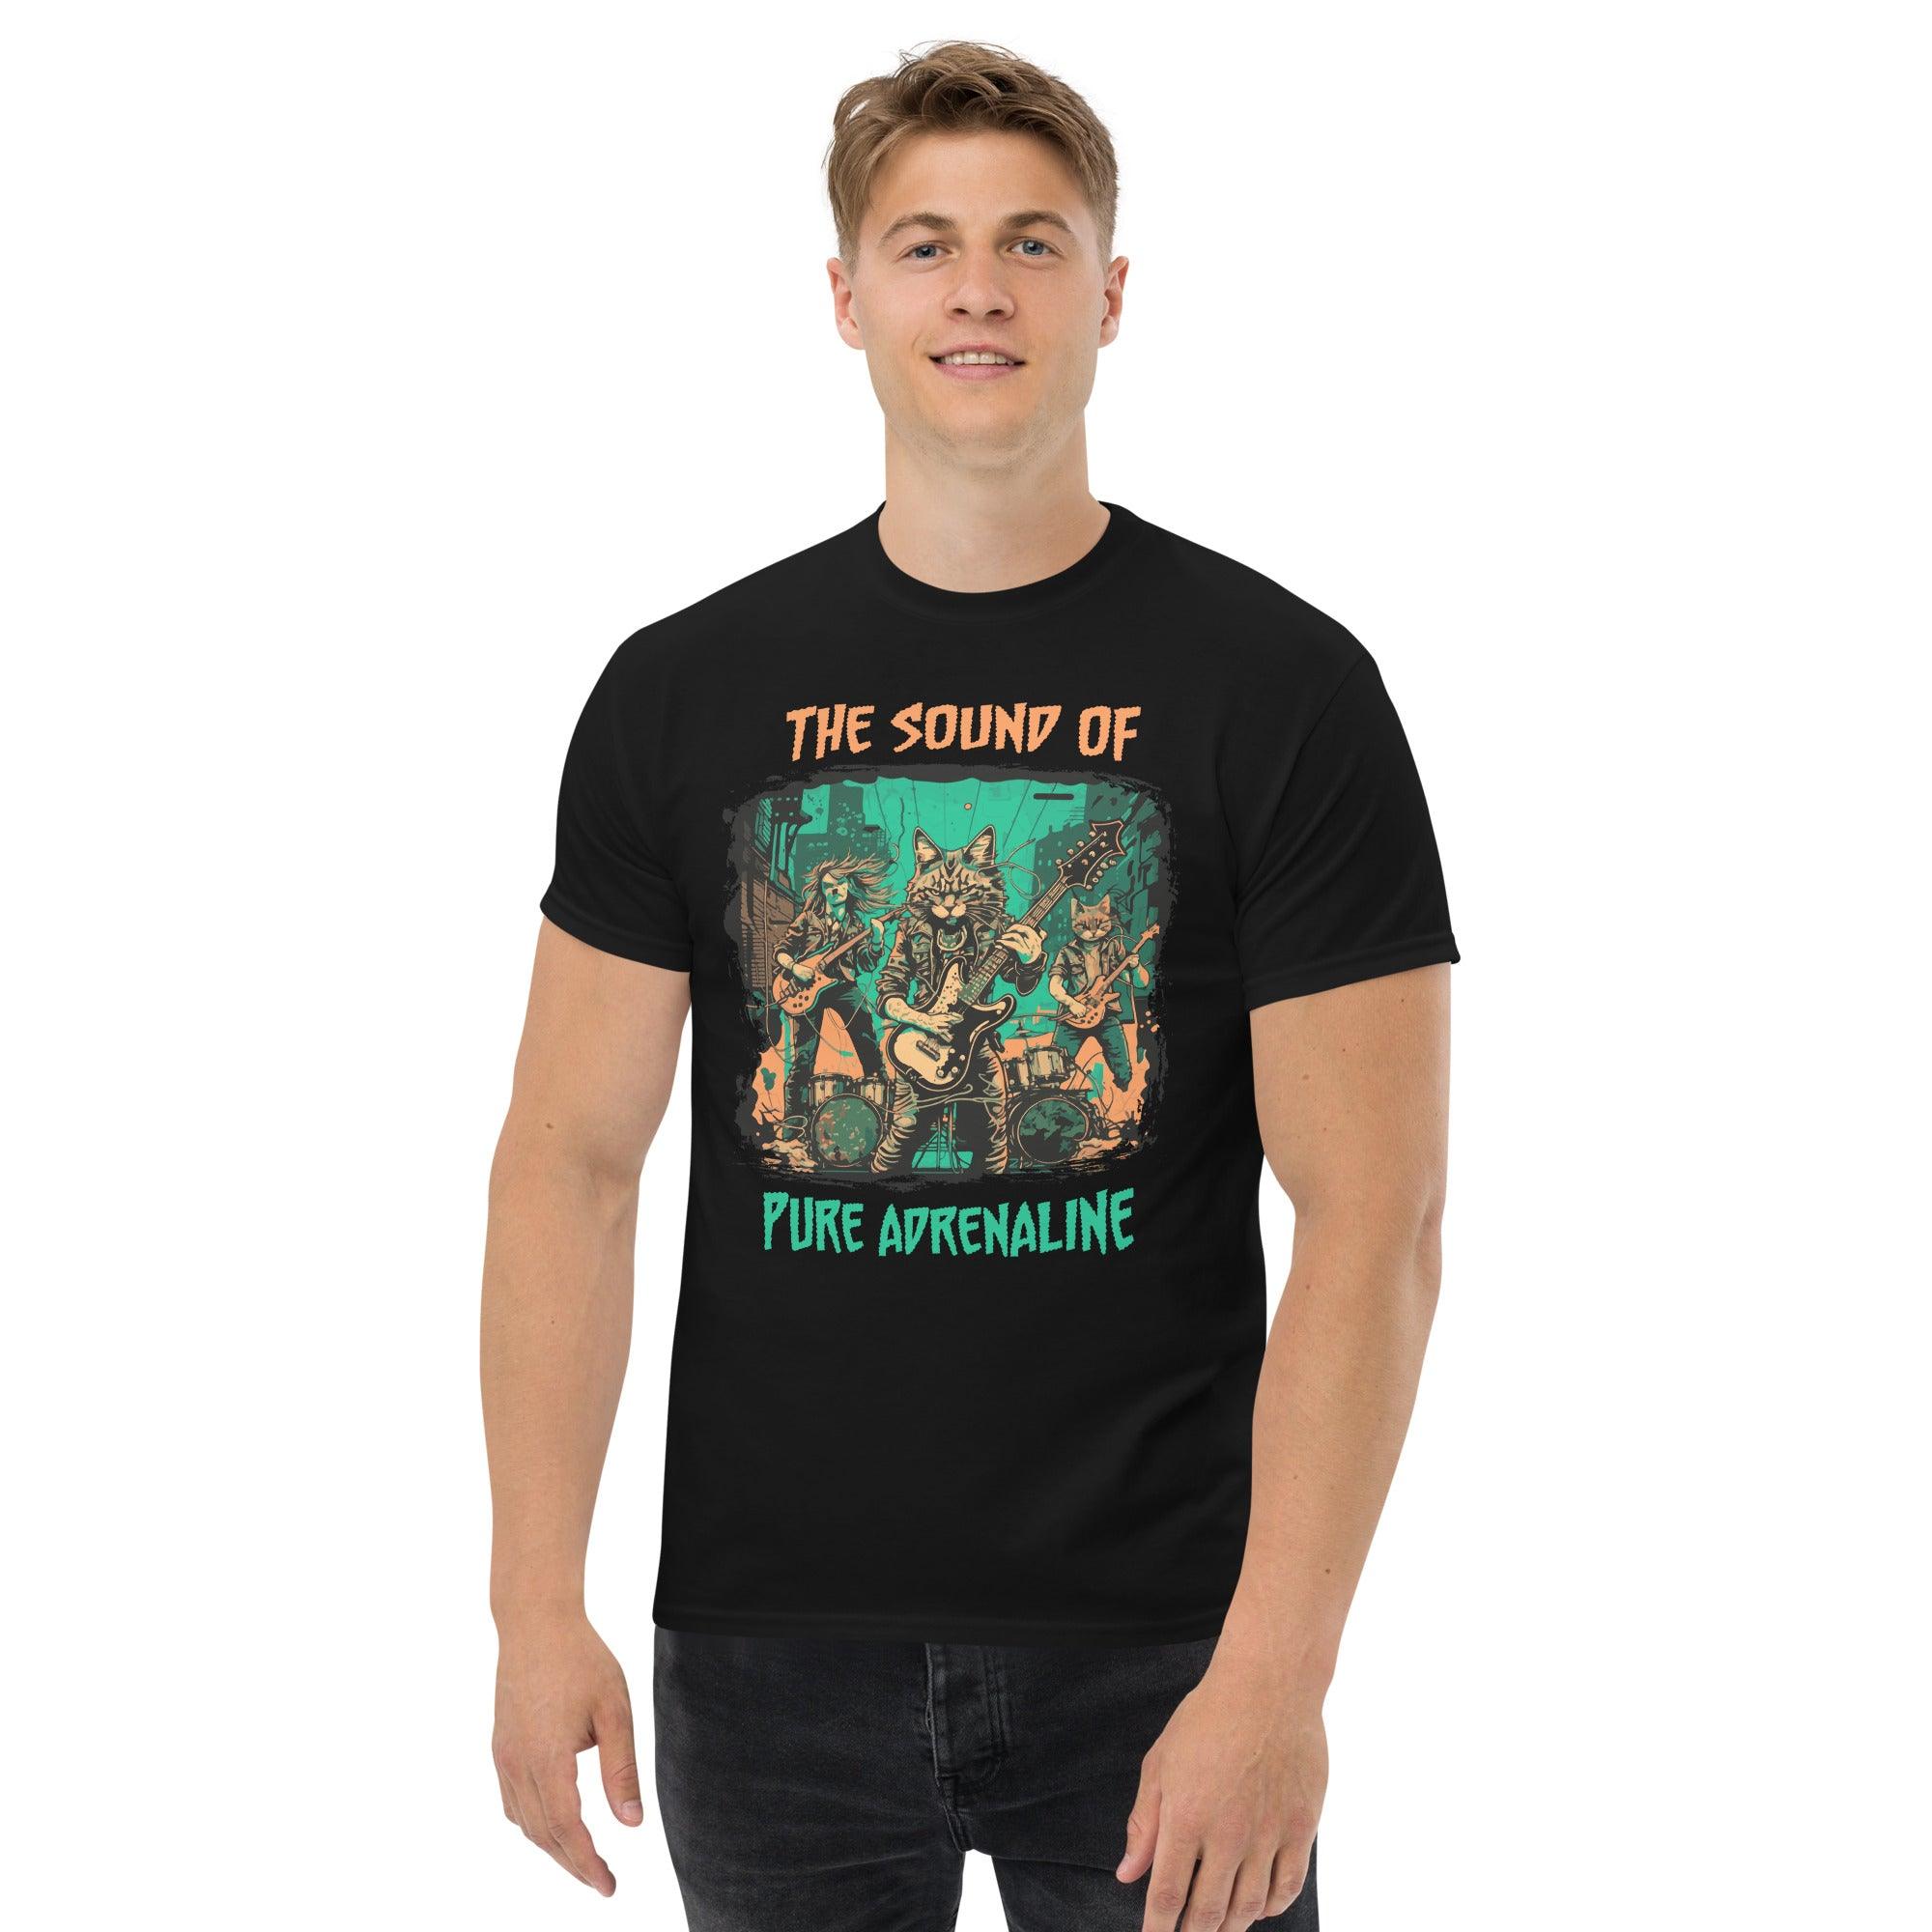 Sound of adrenaline men's classic tee - Beyond T-shirts